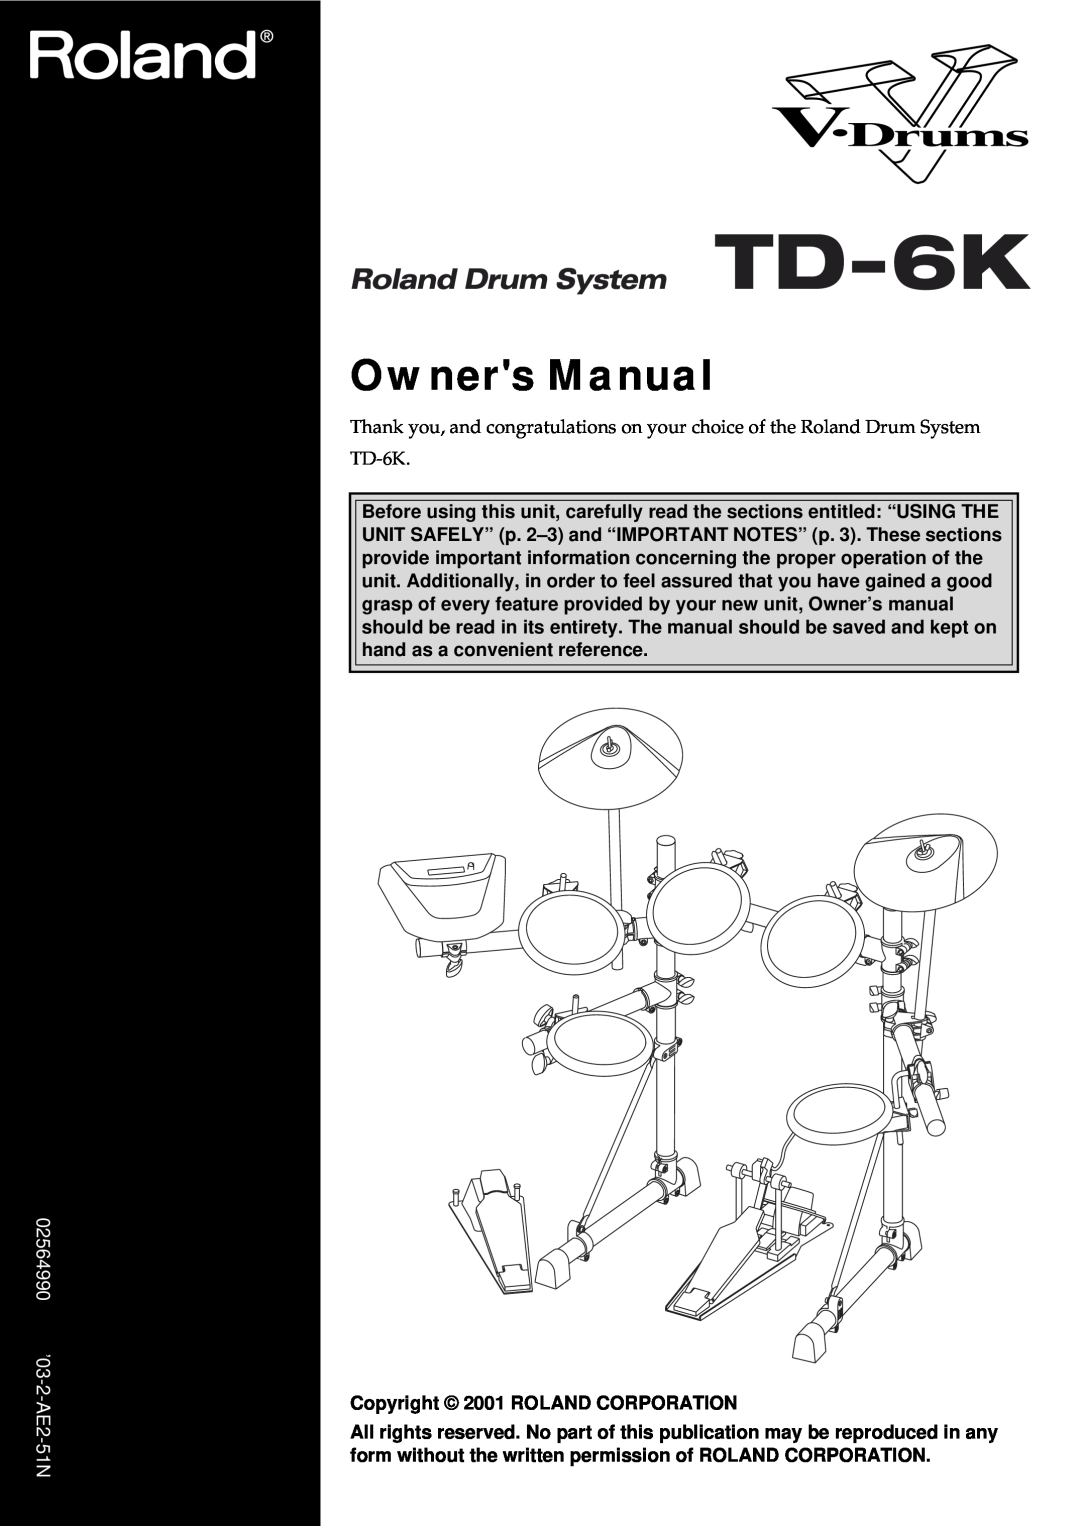 Roland TD-6K manual Owners Manual, 02564990 ’03-2-AE2-51N 